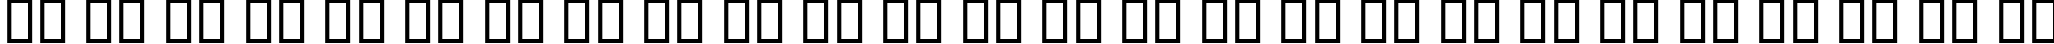 Пример написания английского алфавита шрифтом B Sina Bold